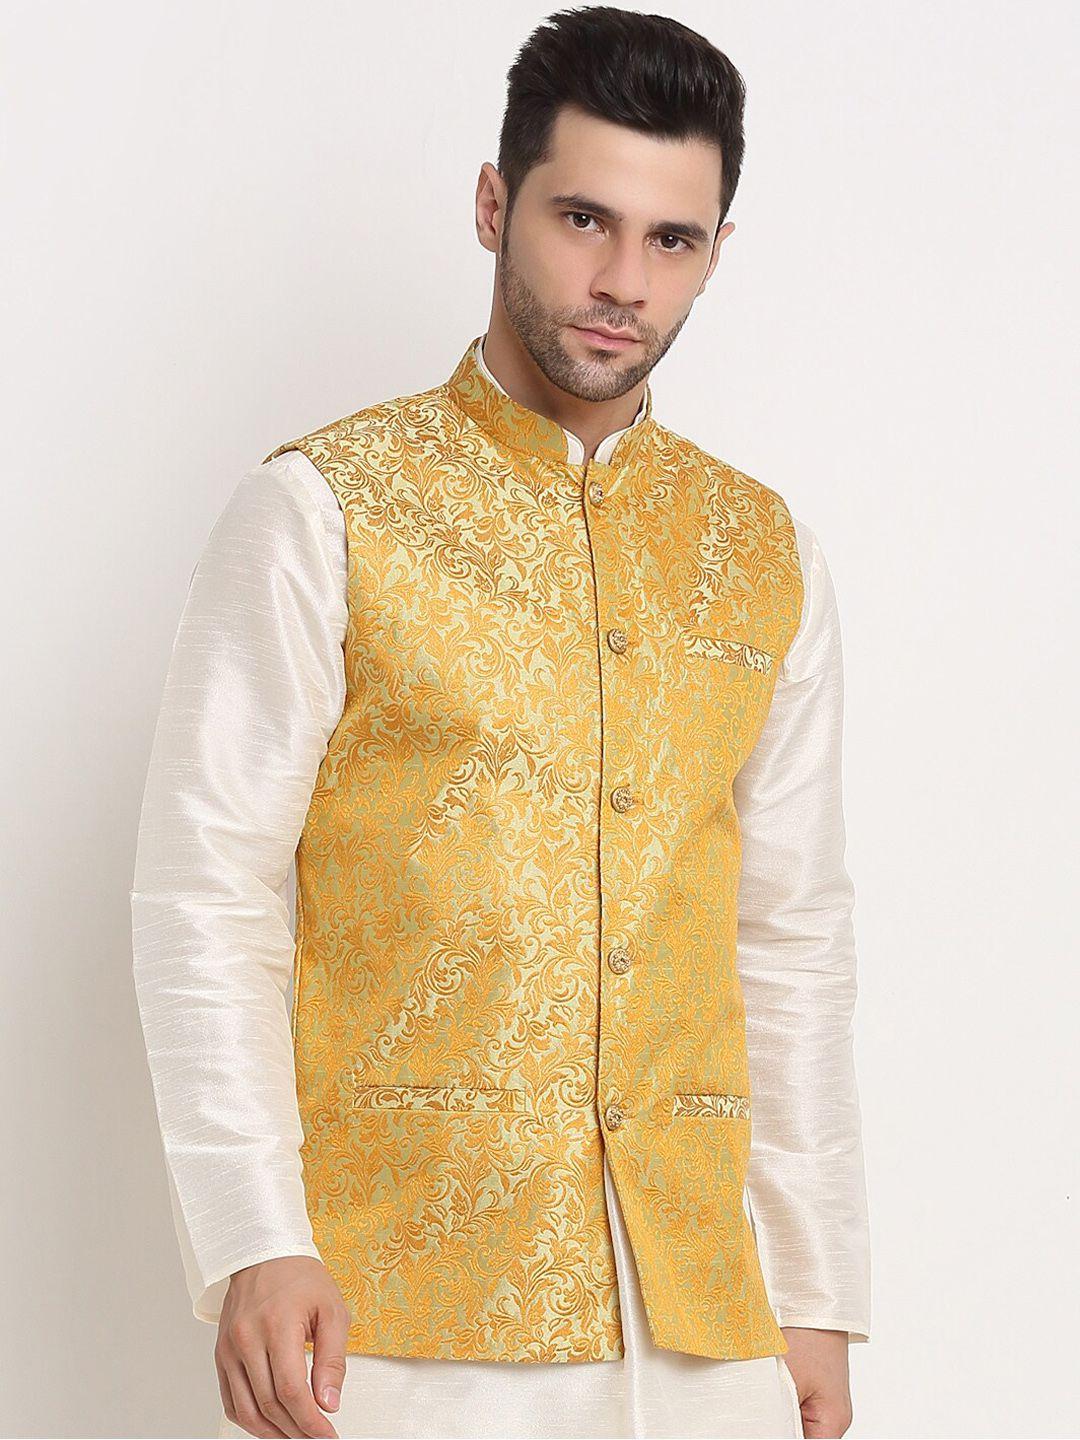 kraft-india-men-gold-toned-jacquard-woven-design-nehru-jacket